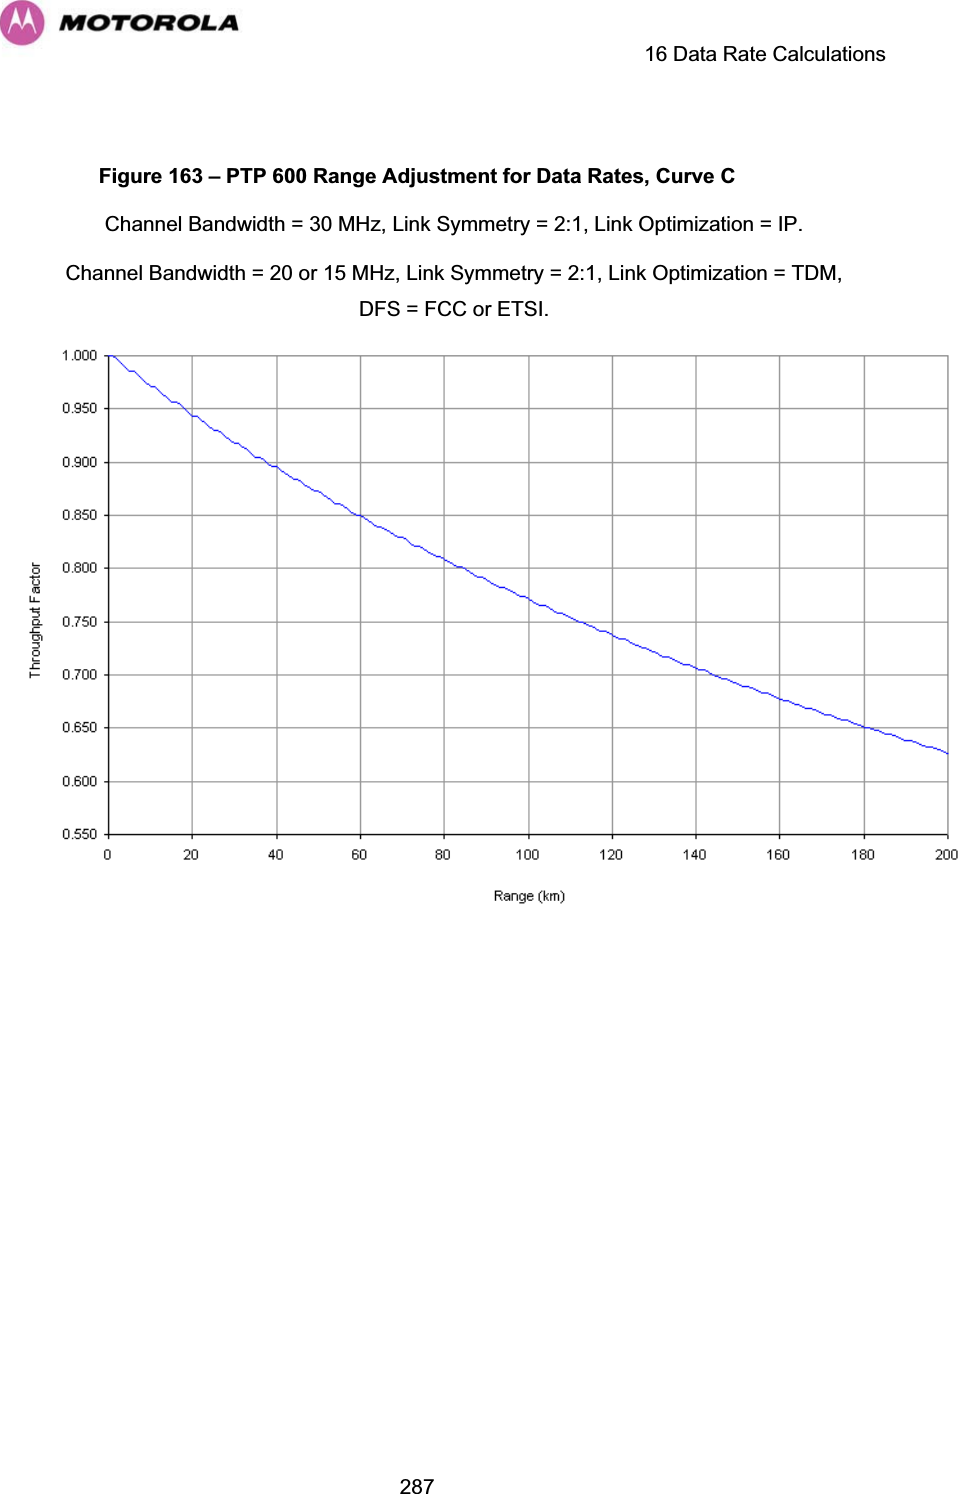     16 Data Rate Calculations  287 Figure 163 – PTP 600 Range Adjustment for Data Rates, Curve C Channel Bandwidth = 30 MHz, Link Symmetry = 2:1, Link Optimization = IP. Channel Bandwidth = 20 or 15 MHz, Link Symmetry = 2:1, Link Optimization = TDM,  DFS = FCC or ETSI.  